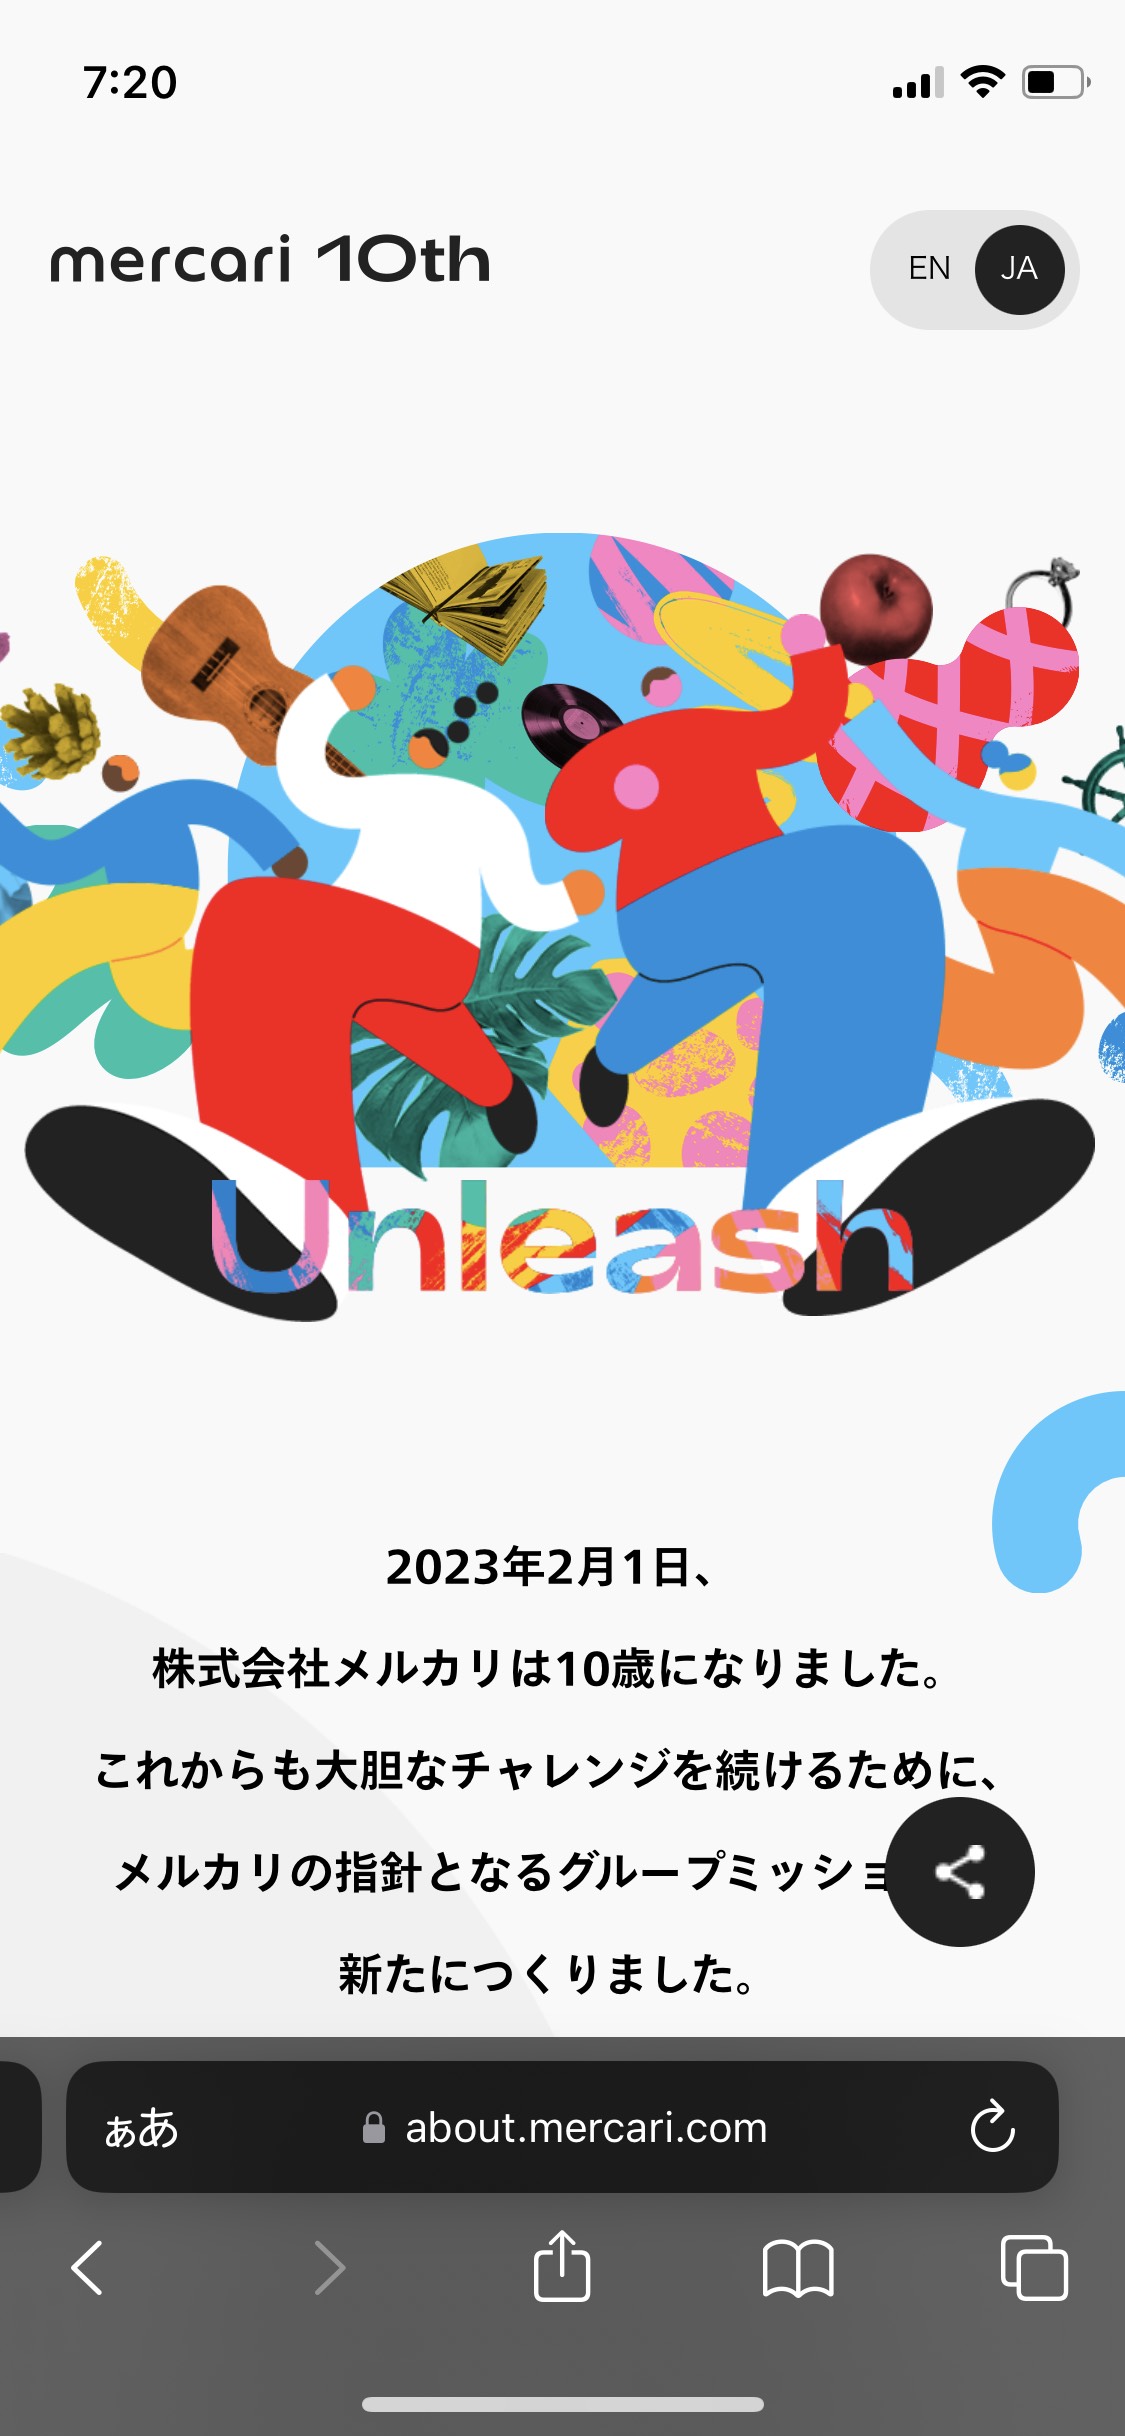 Unleash | Mercari’s 10th Anniversary | 株式会社メルカリ